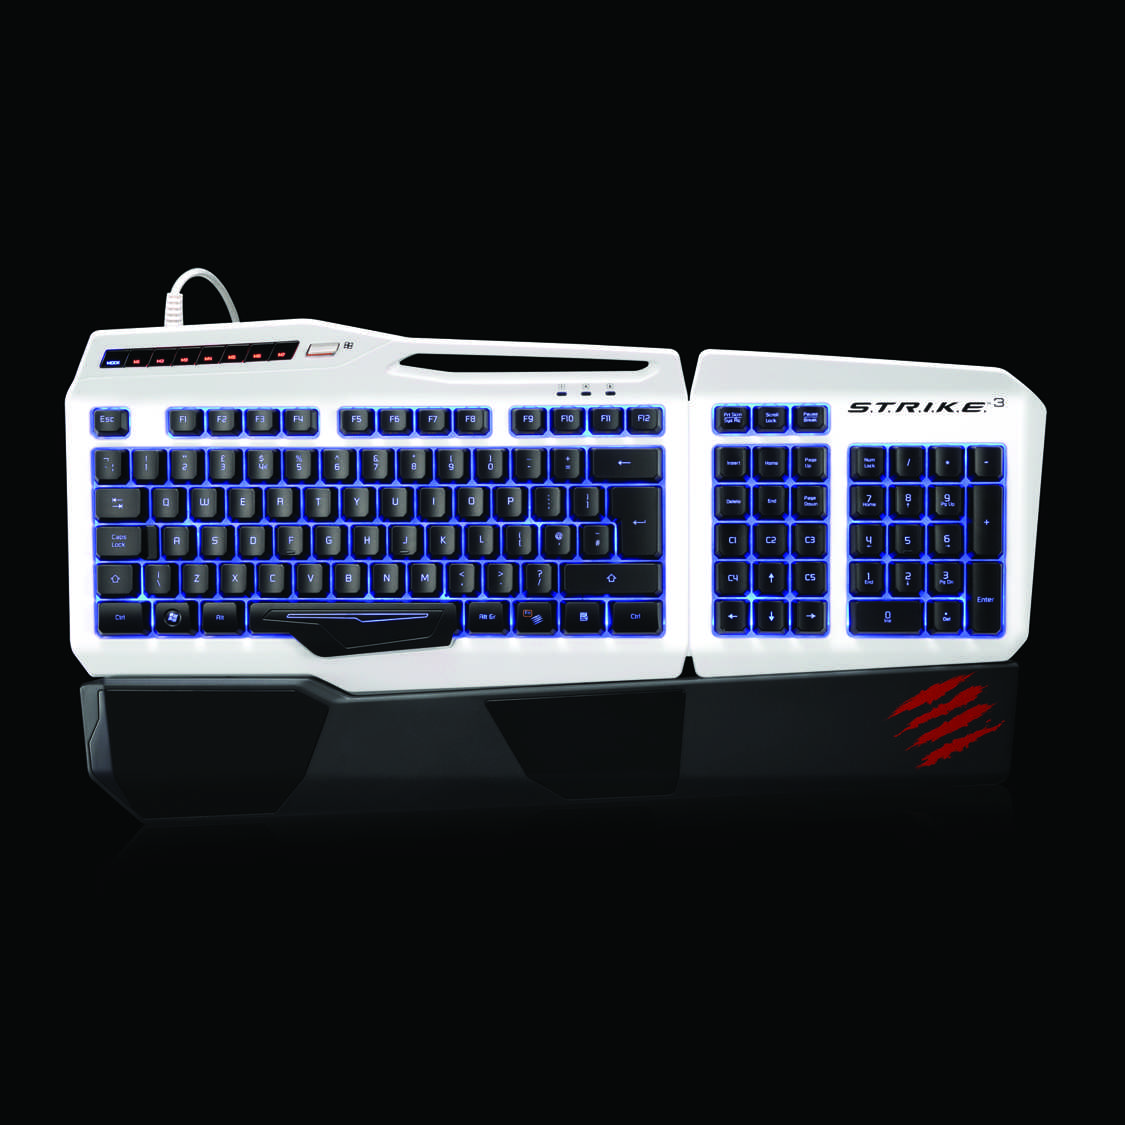 Mad catz s.t.r.i.k.e. 3 gaming keyboard white usb купить по акционной цене , отзывы и обзоры.